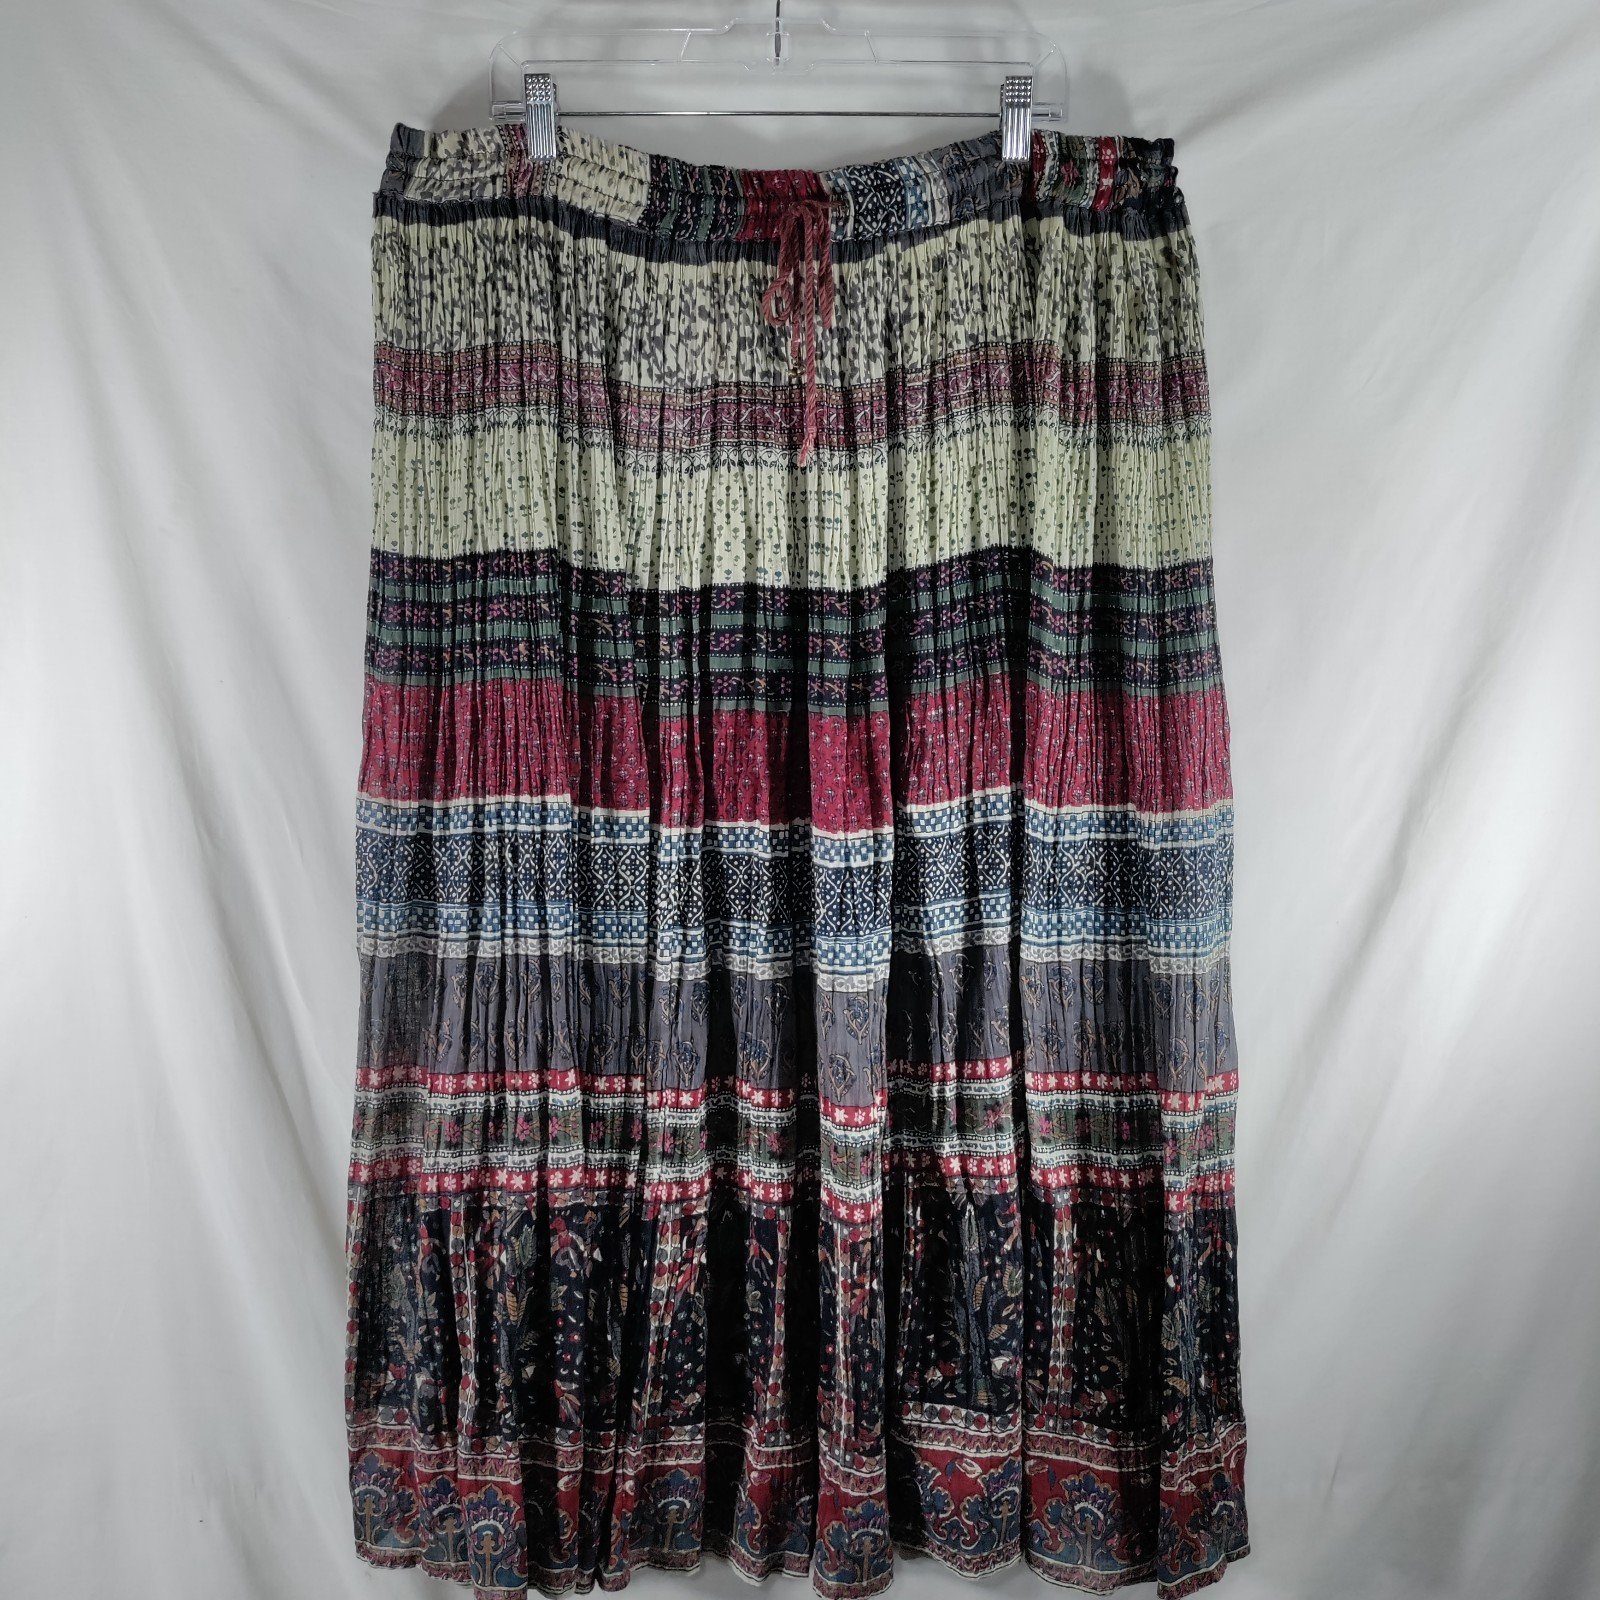 Discounted Basic Editions Boho Bohemian Maxi Skirt Wome